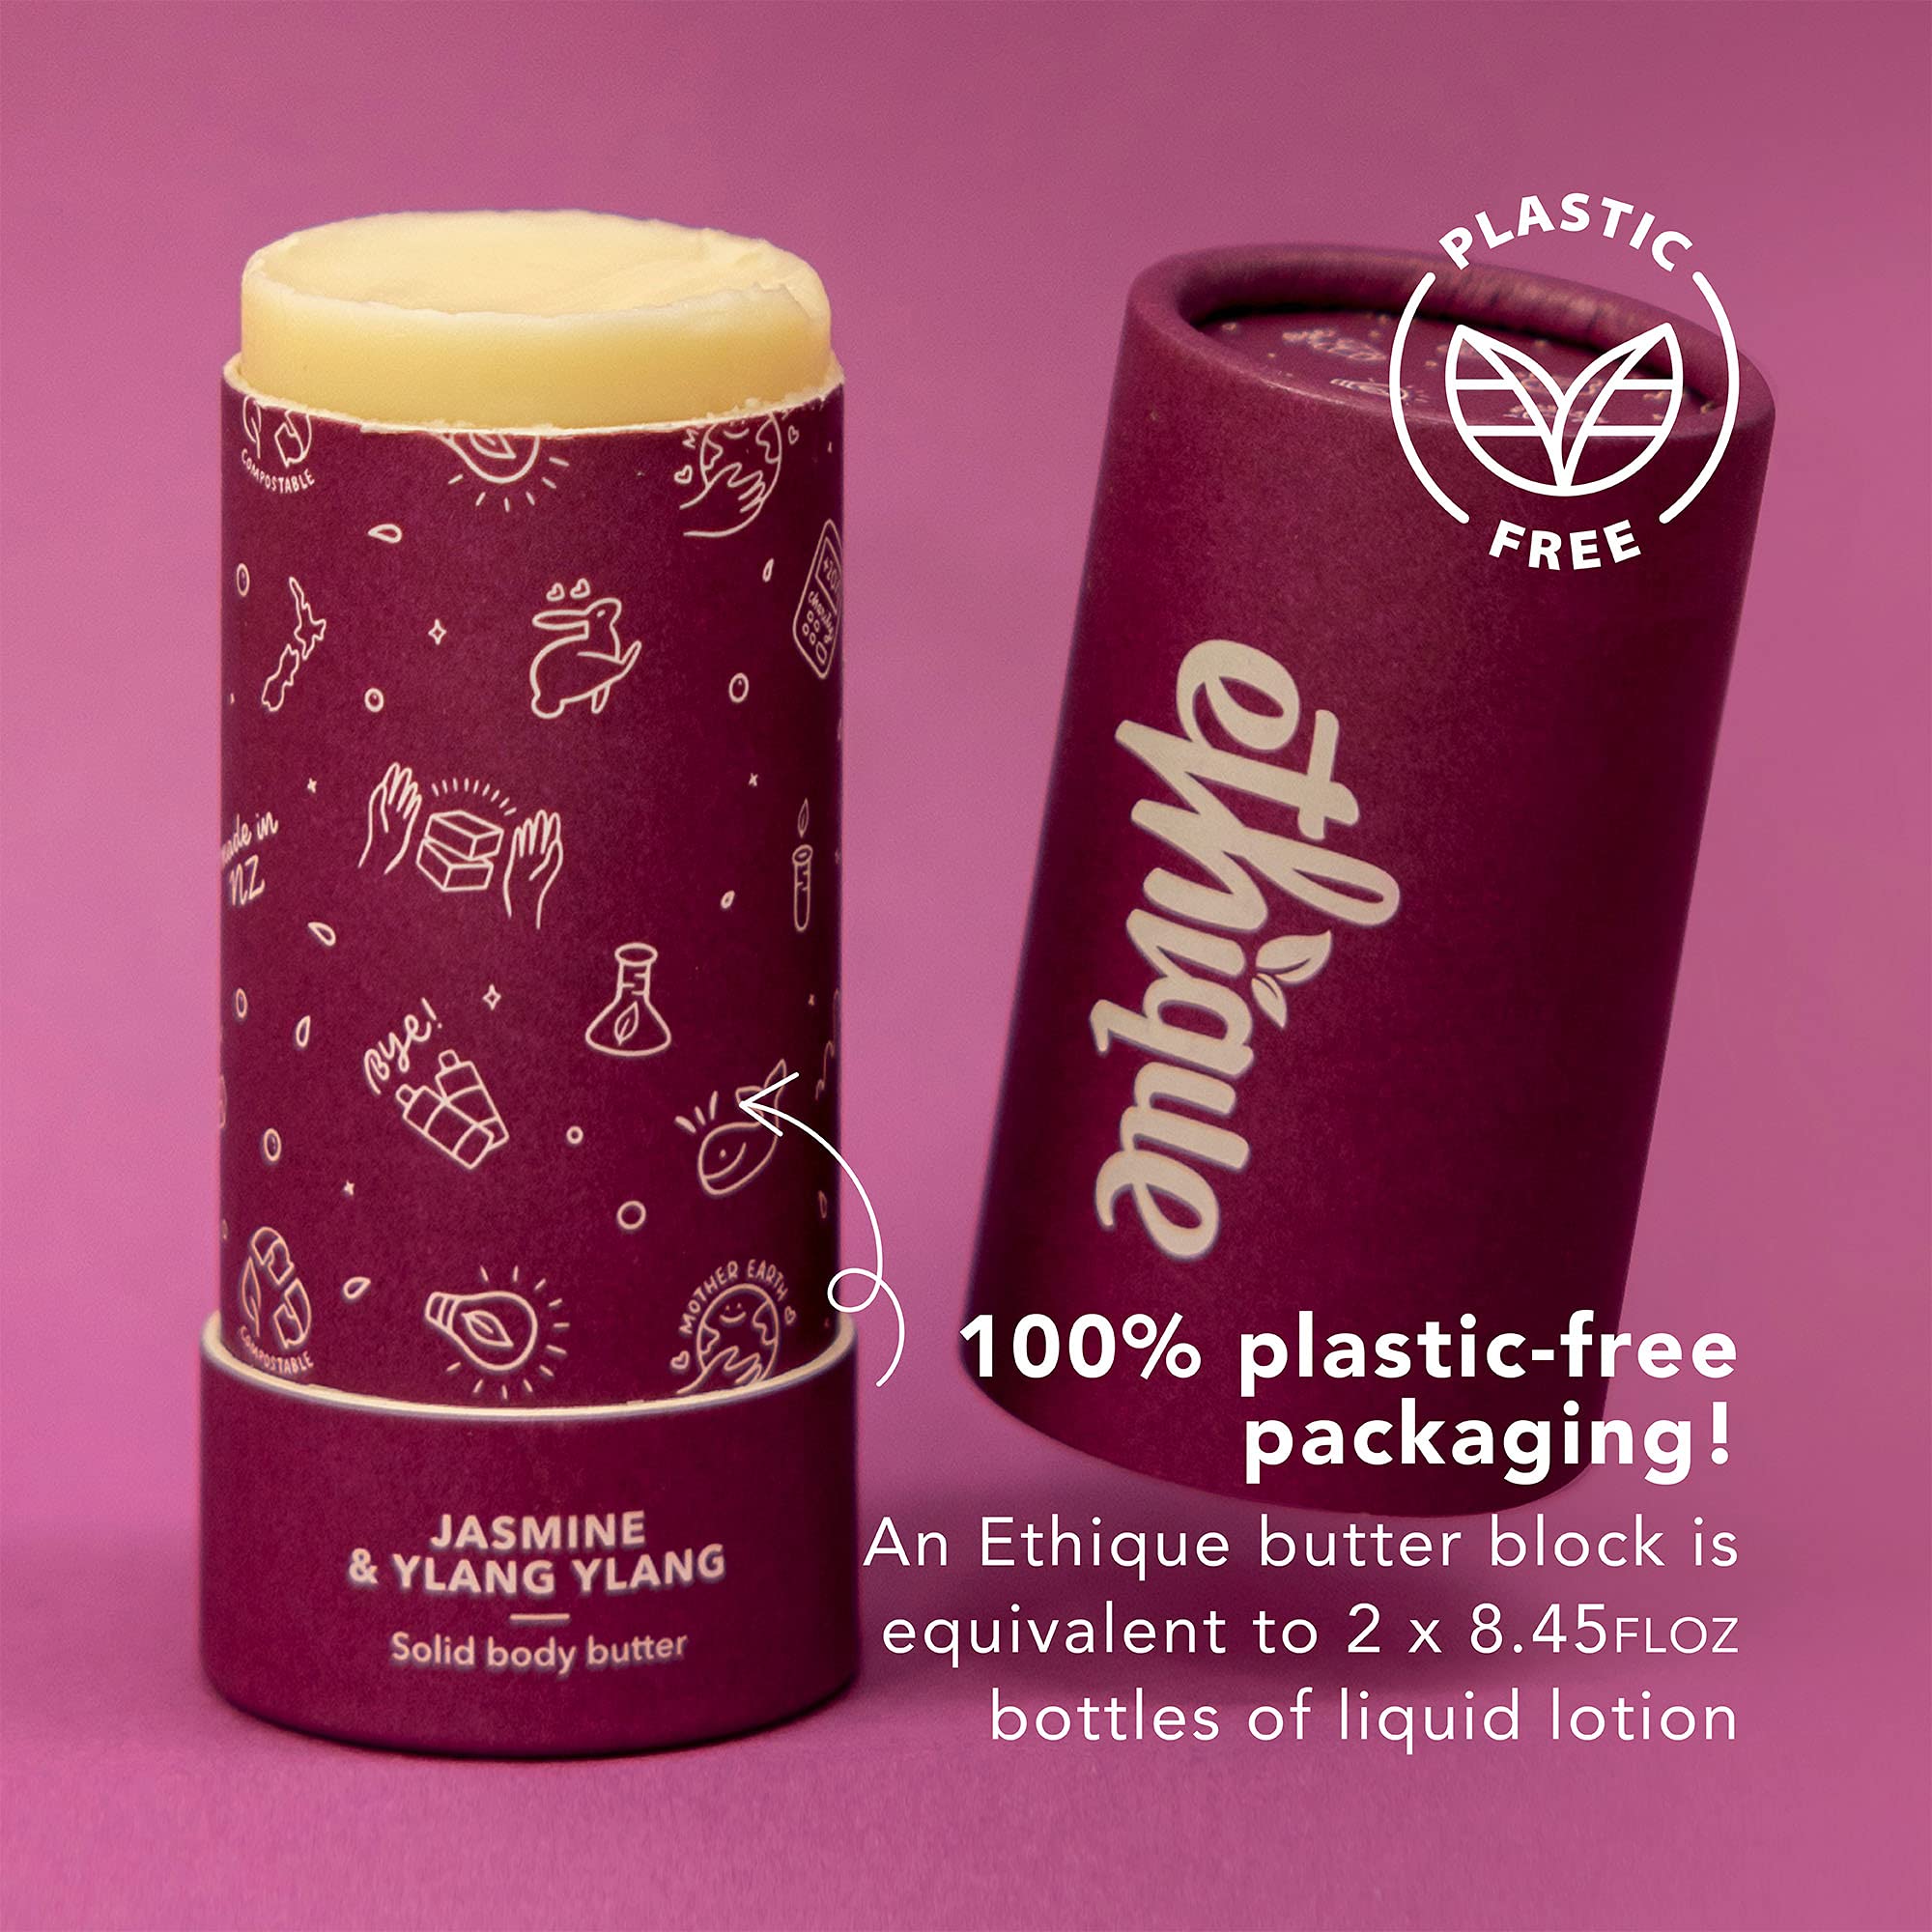 Ethique Nourishing Jasmine & Ylang Ylang Butter Block - Moisturizing Tube - Plastic-Free, Vegan, Cruelty-Free, Eco-Friendly, 3.53 oz (Pack of 1)